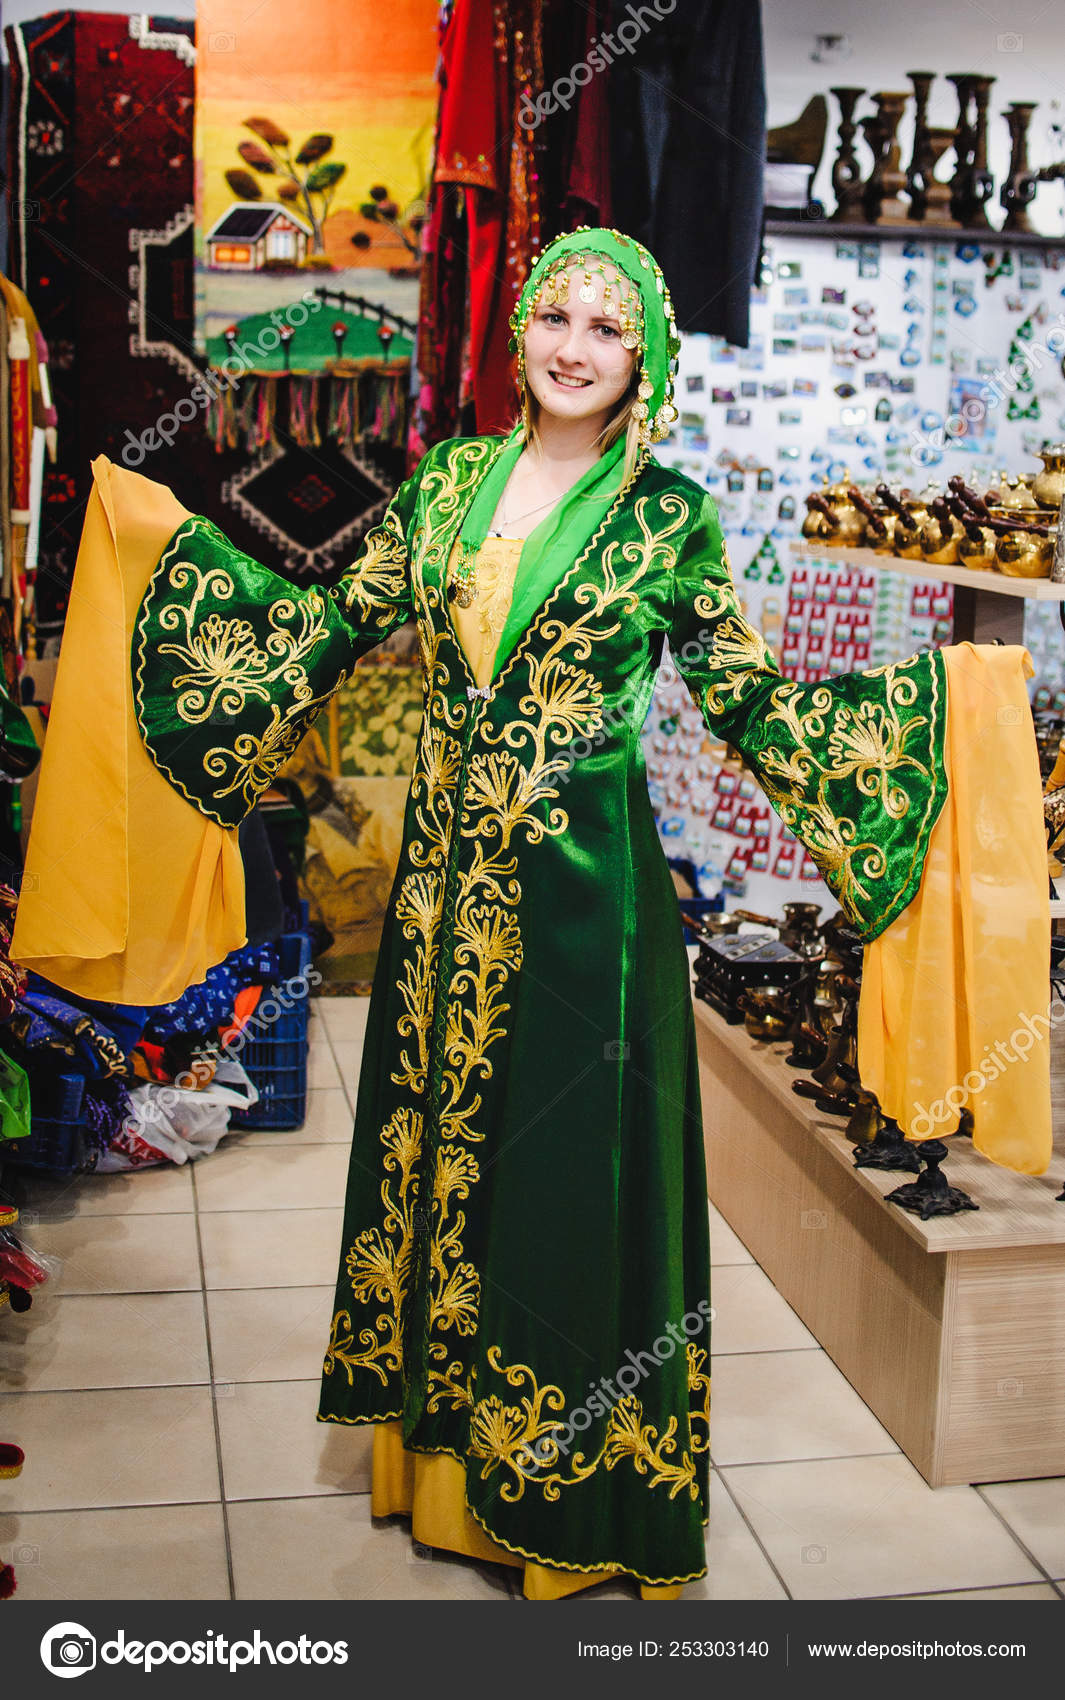 https://st4.depositphotos.com/21188836/25330/i/1600/depositphotos_253303140-stock-photo-young-woman-traditional-turkish-costume.jpg